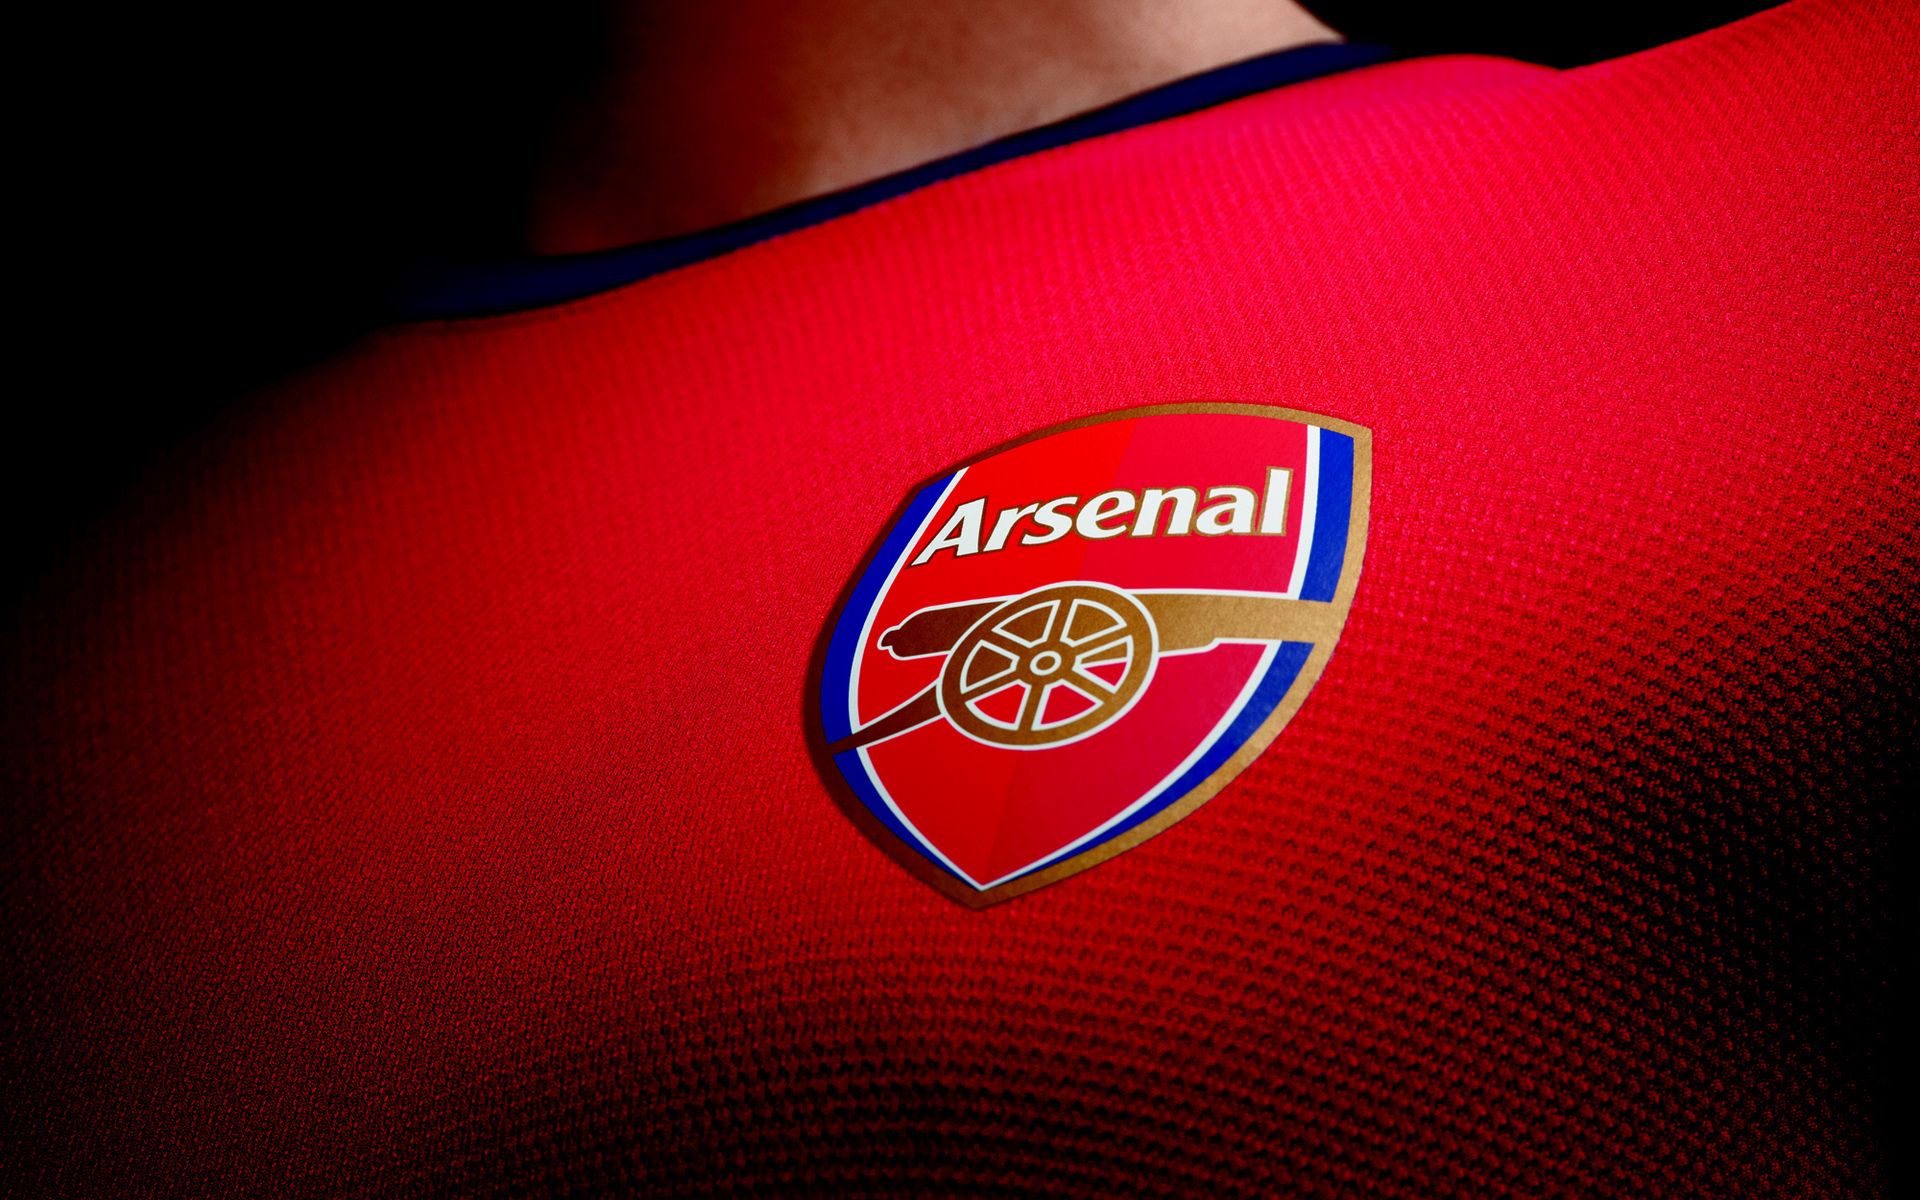 Arsenal Players, jersey, logo wallpaper. Arsenal Players, jersey, logo